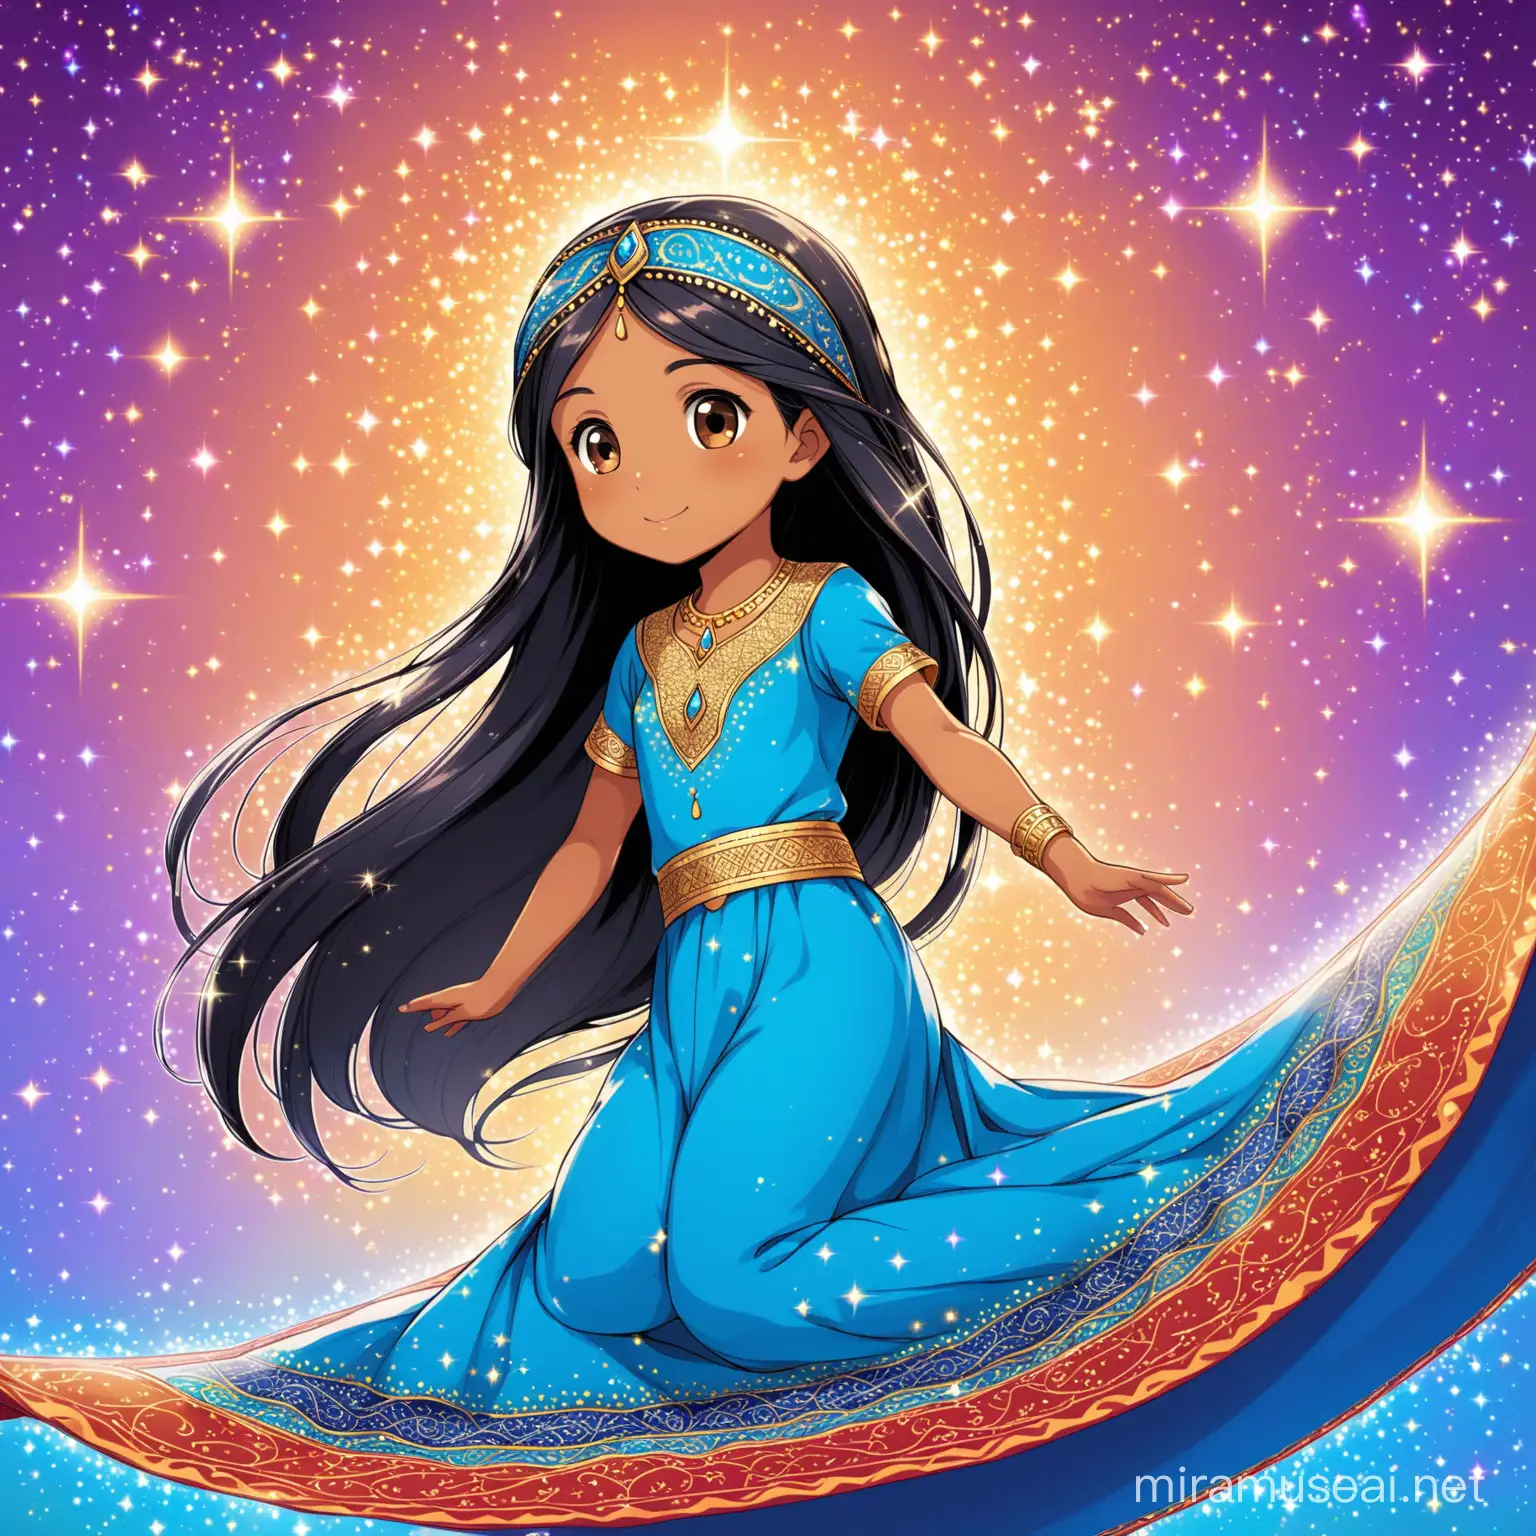 Magical Flight Tan Girl in Sparkling Blue Arabian Attire Soars on Magic Carpet